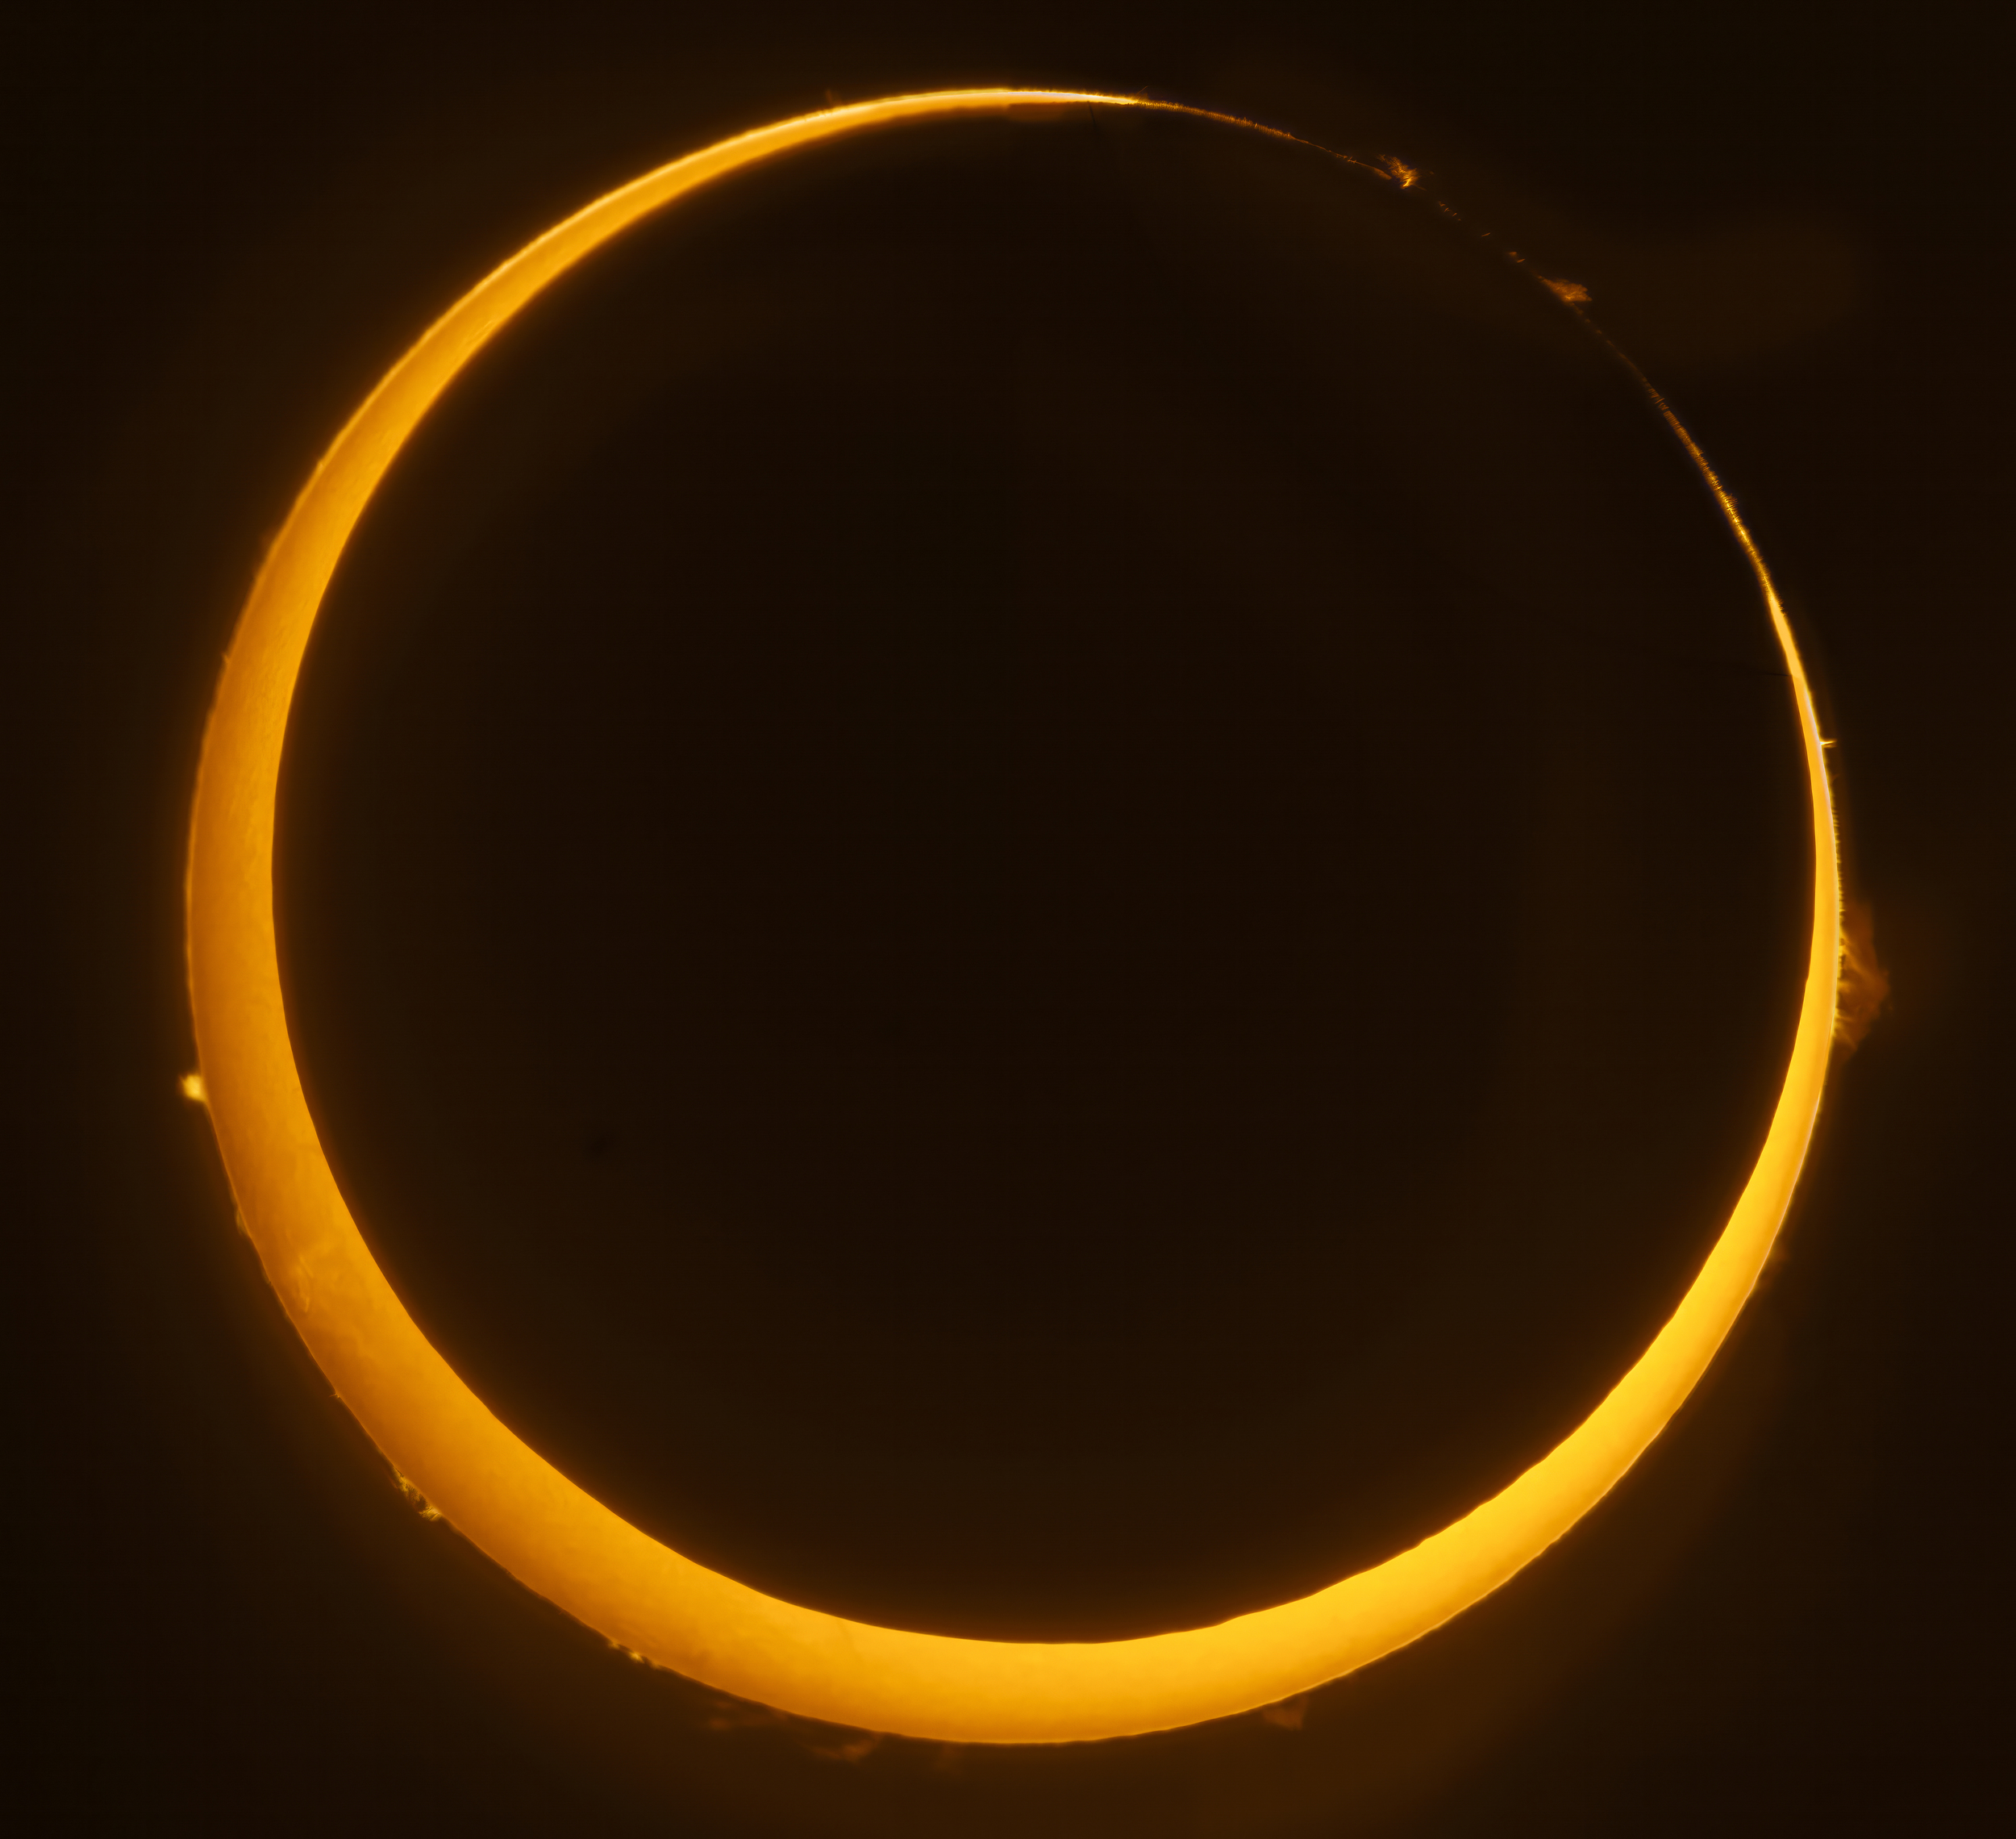 RB Annular Eclipse 2c_092210.jpg